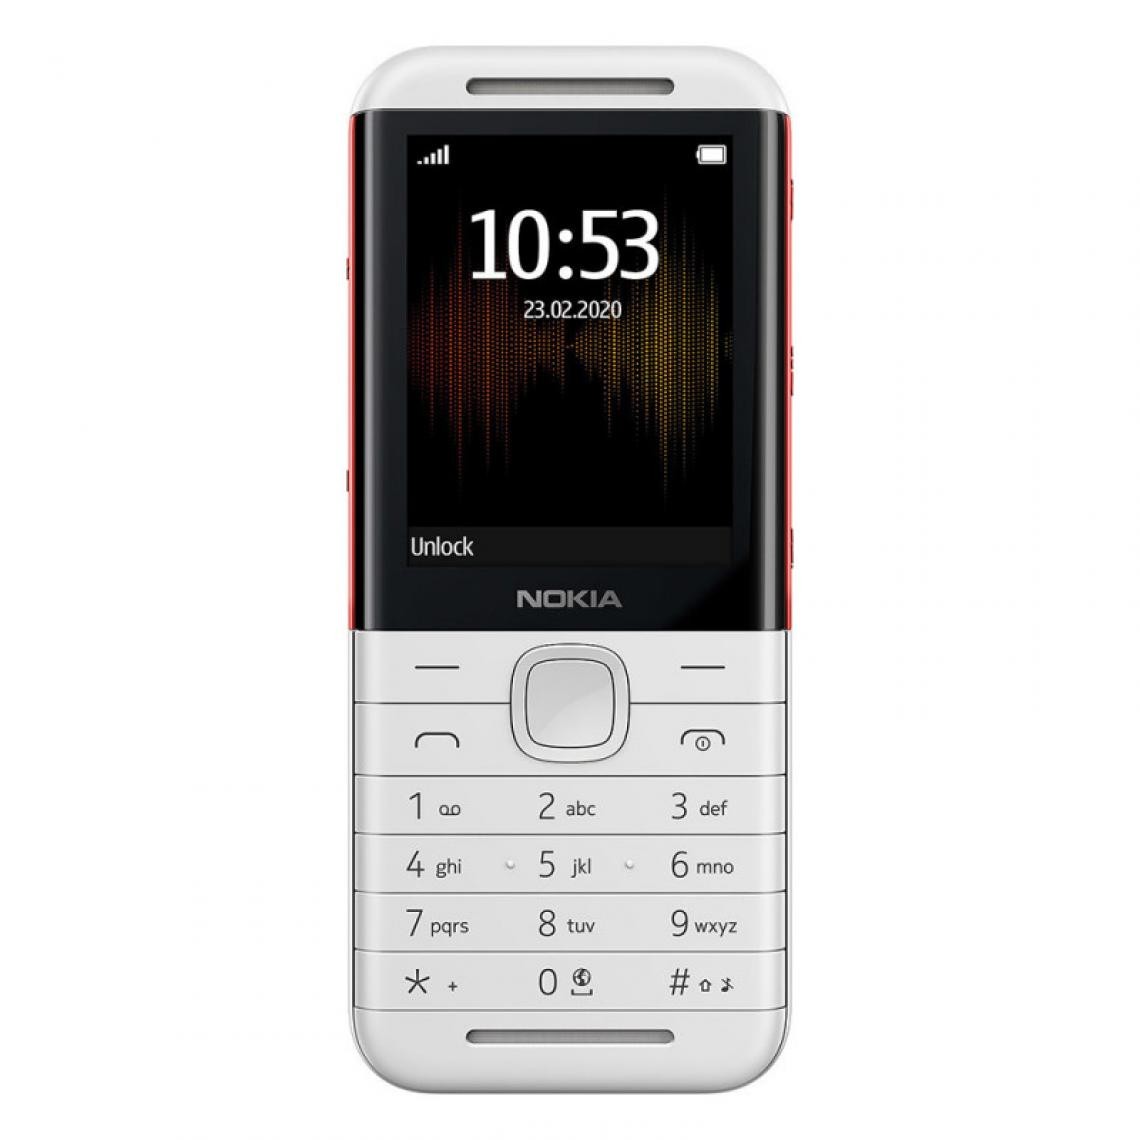 Nokia - Nokia 5310 (Double Sim) Blanc et Rouge - Smartphone Android